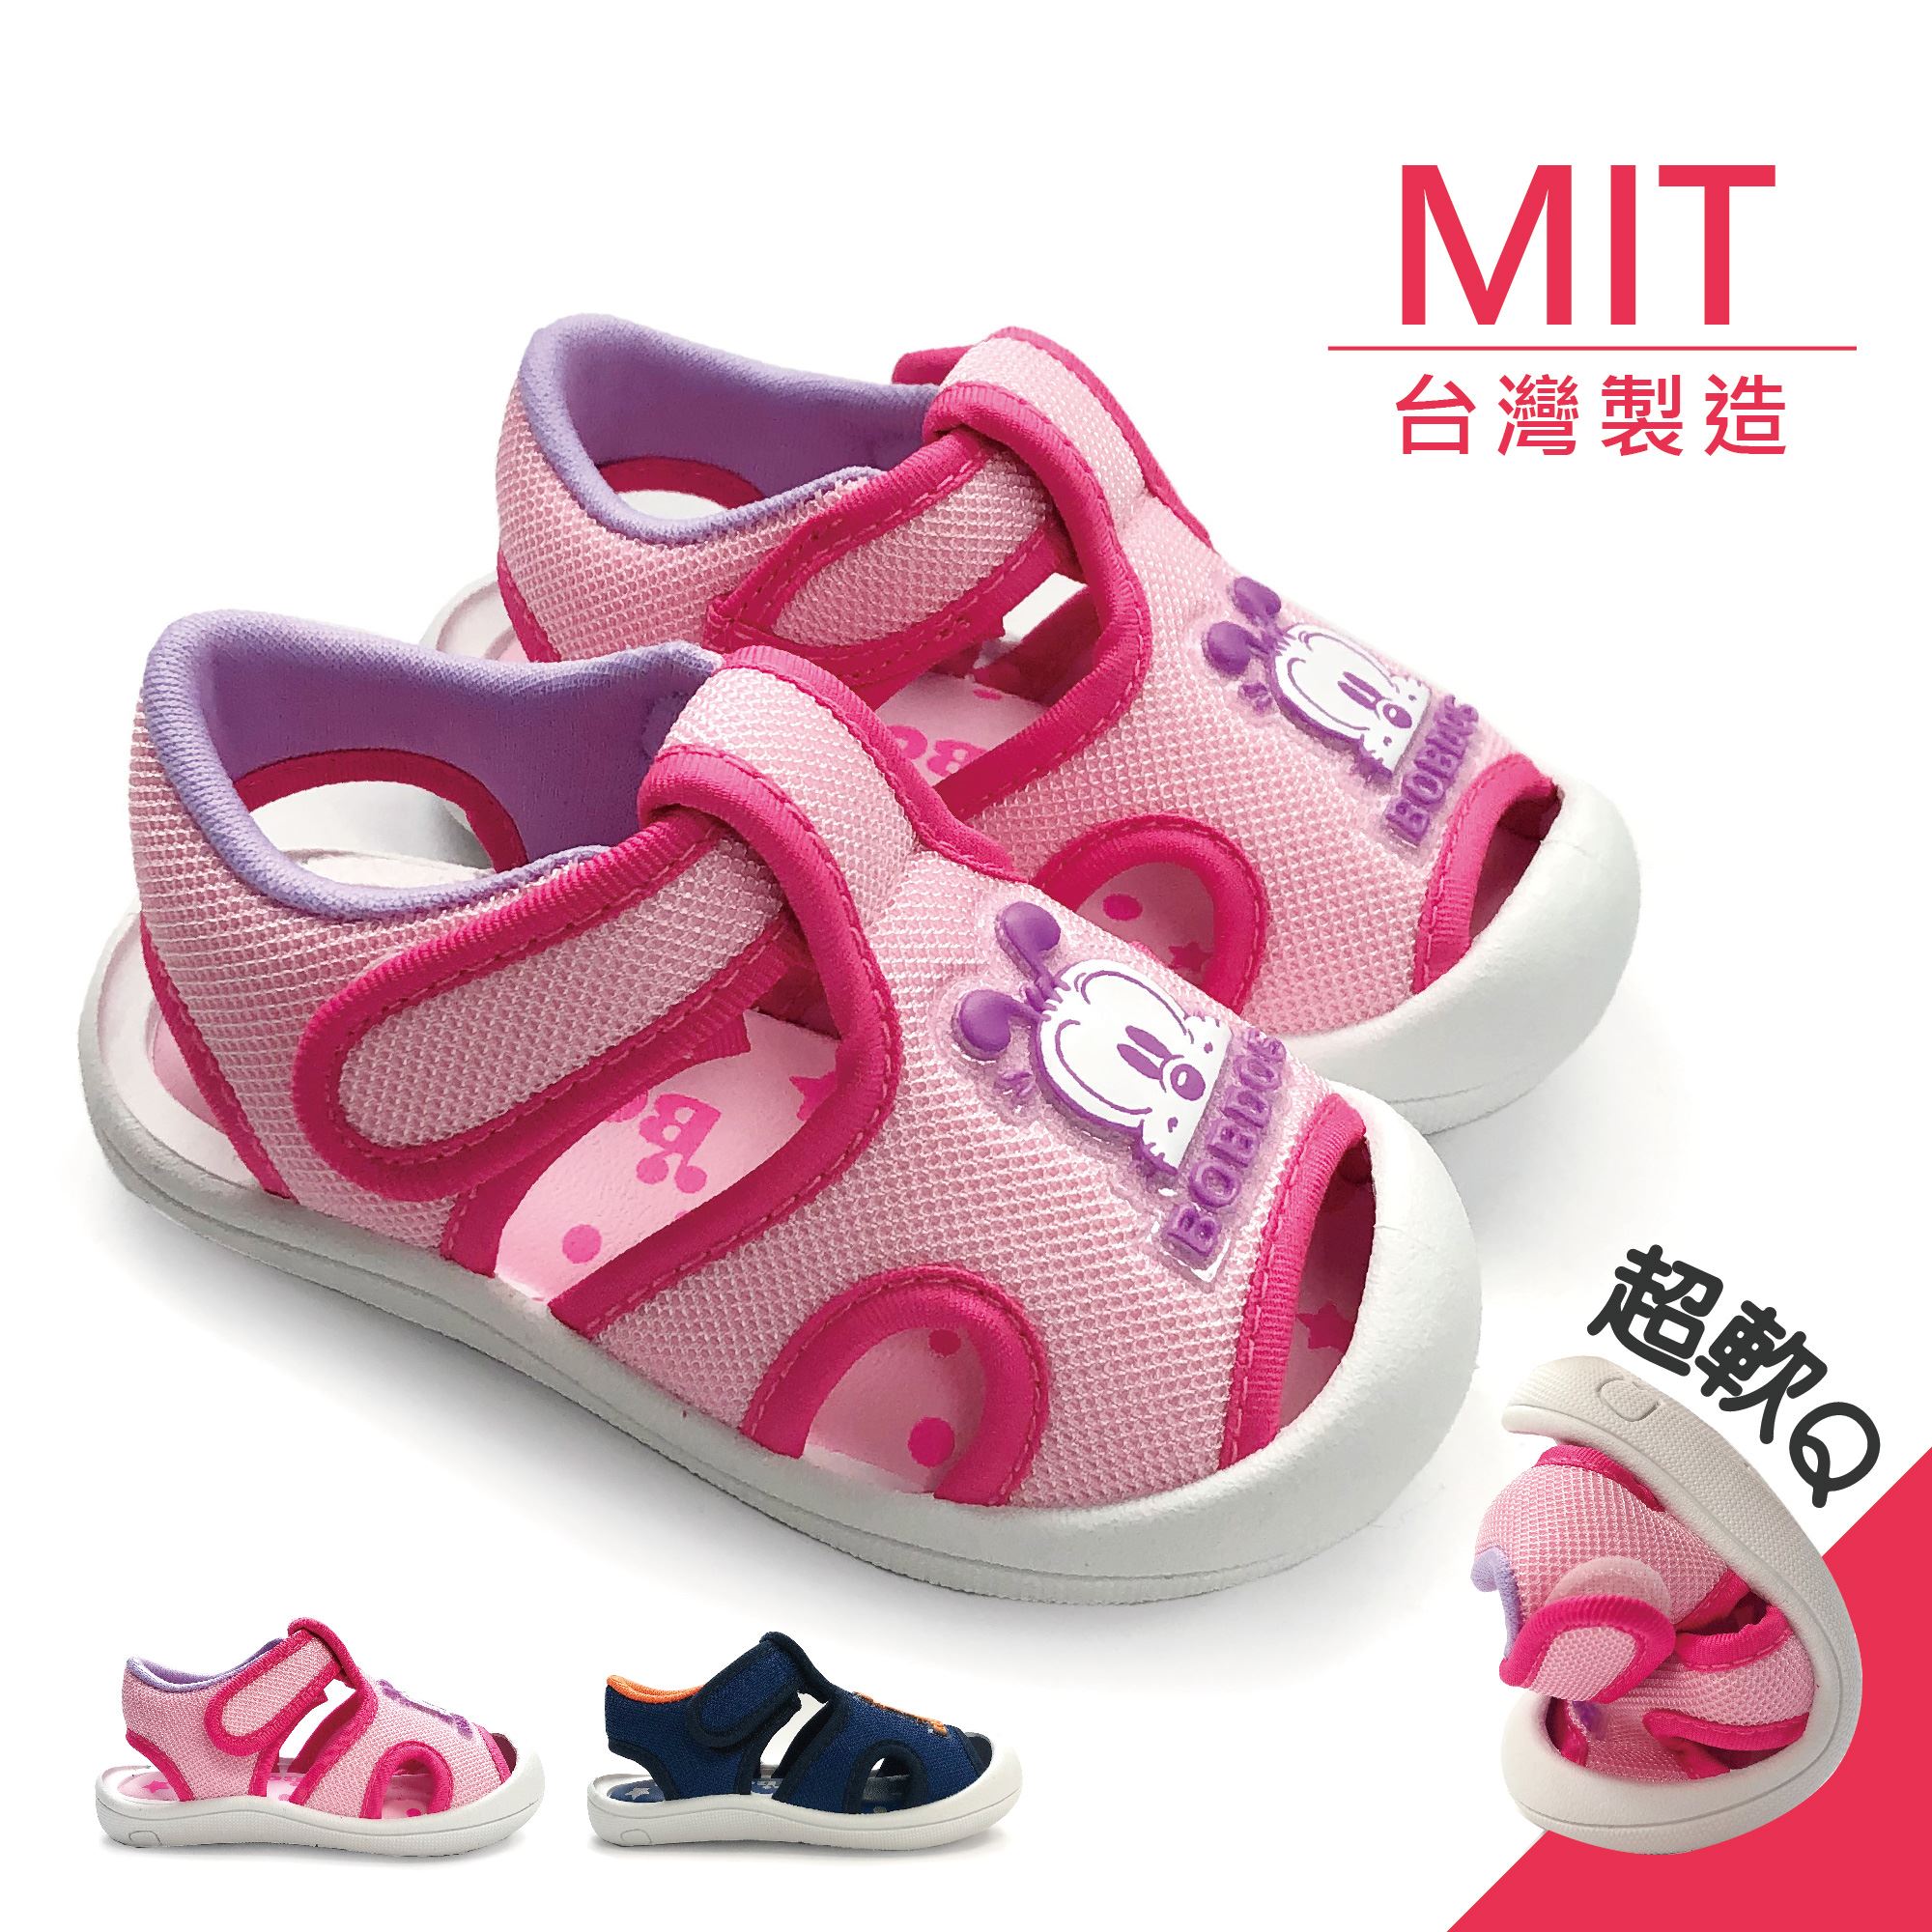 BOBDOG巴布豆 童款護指防踢運動涼鞋 [B6090] 粉 藍 MIT台灣製造【巷子屋】